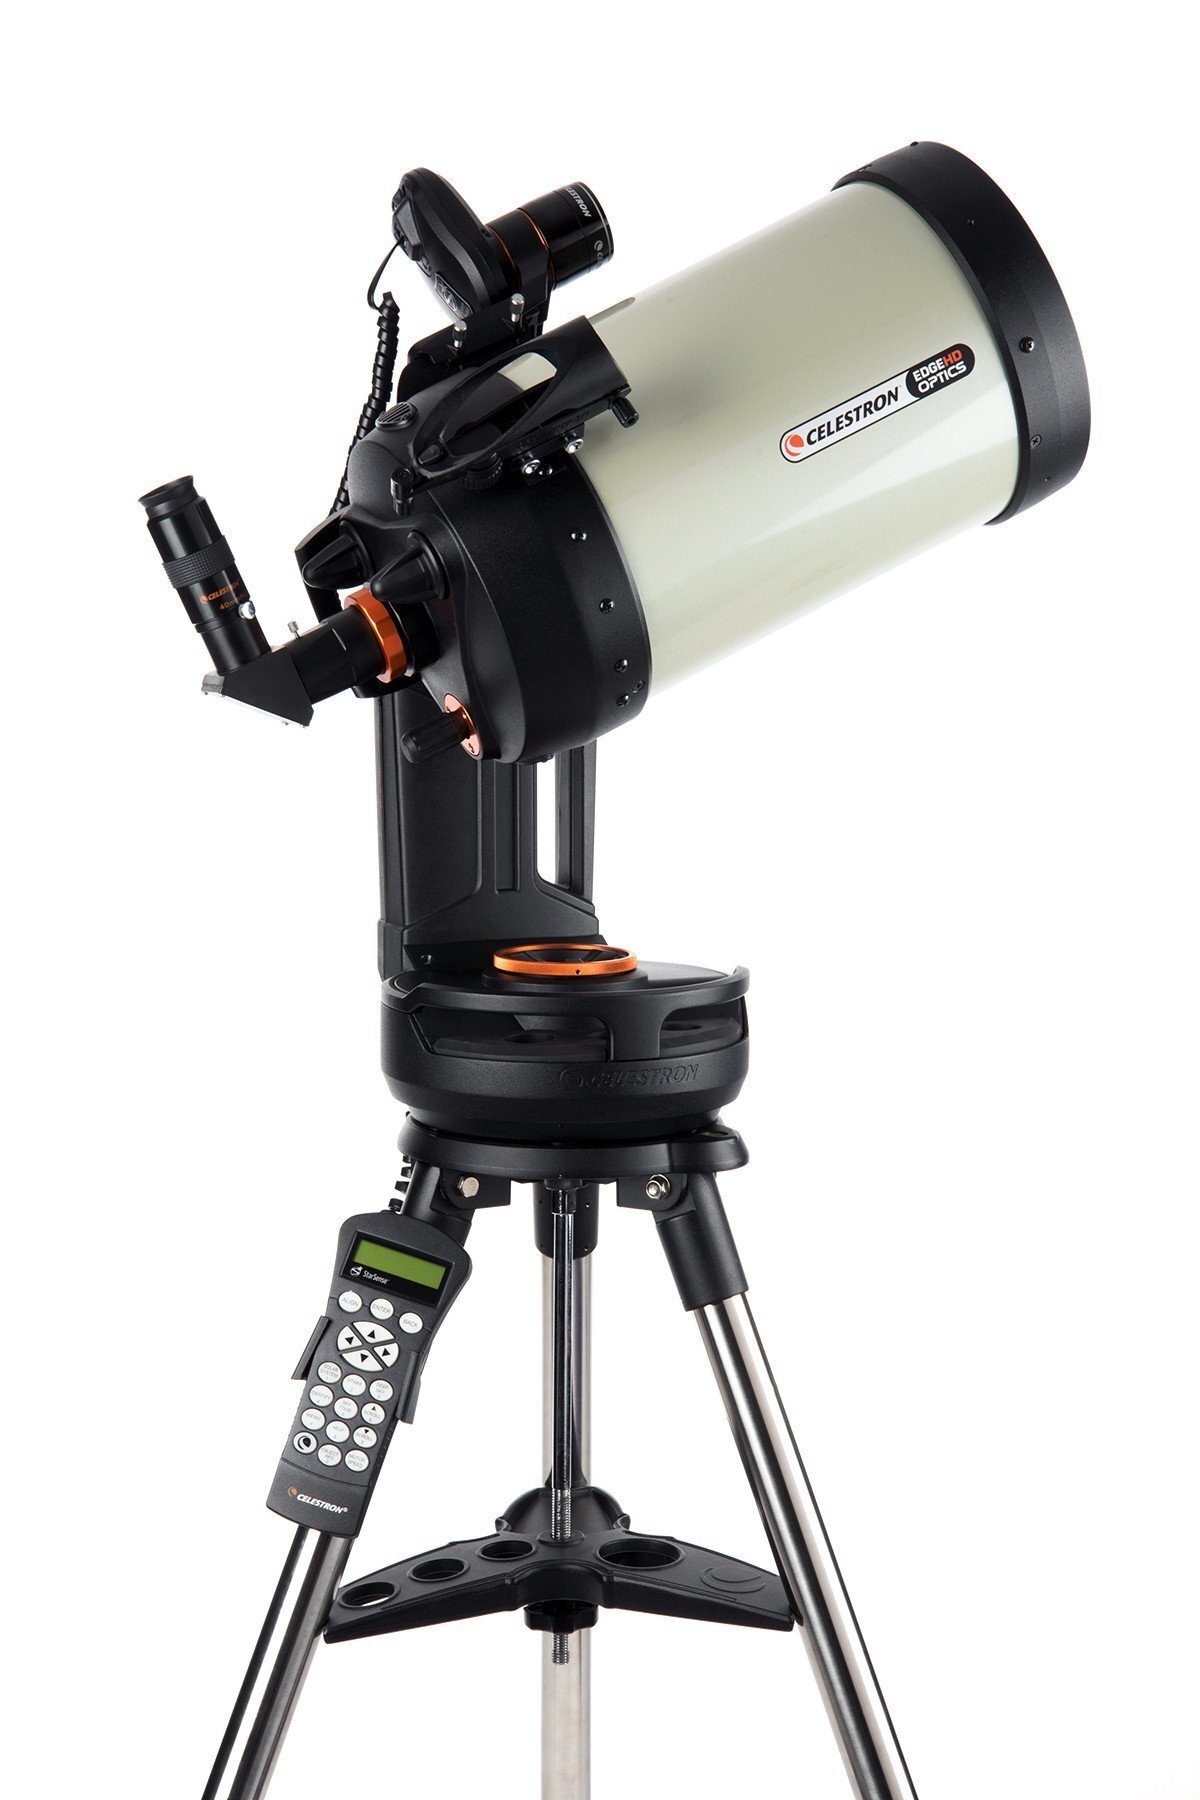 Celestron Nexstar Evolution StarSense 8 inch HD catadioptrische telescoop